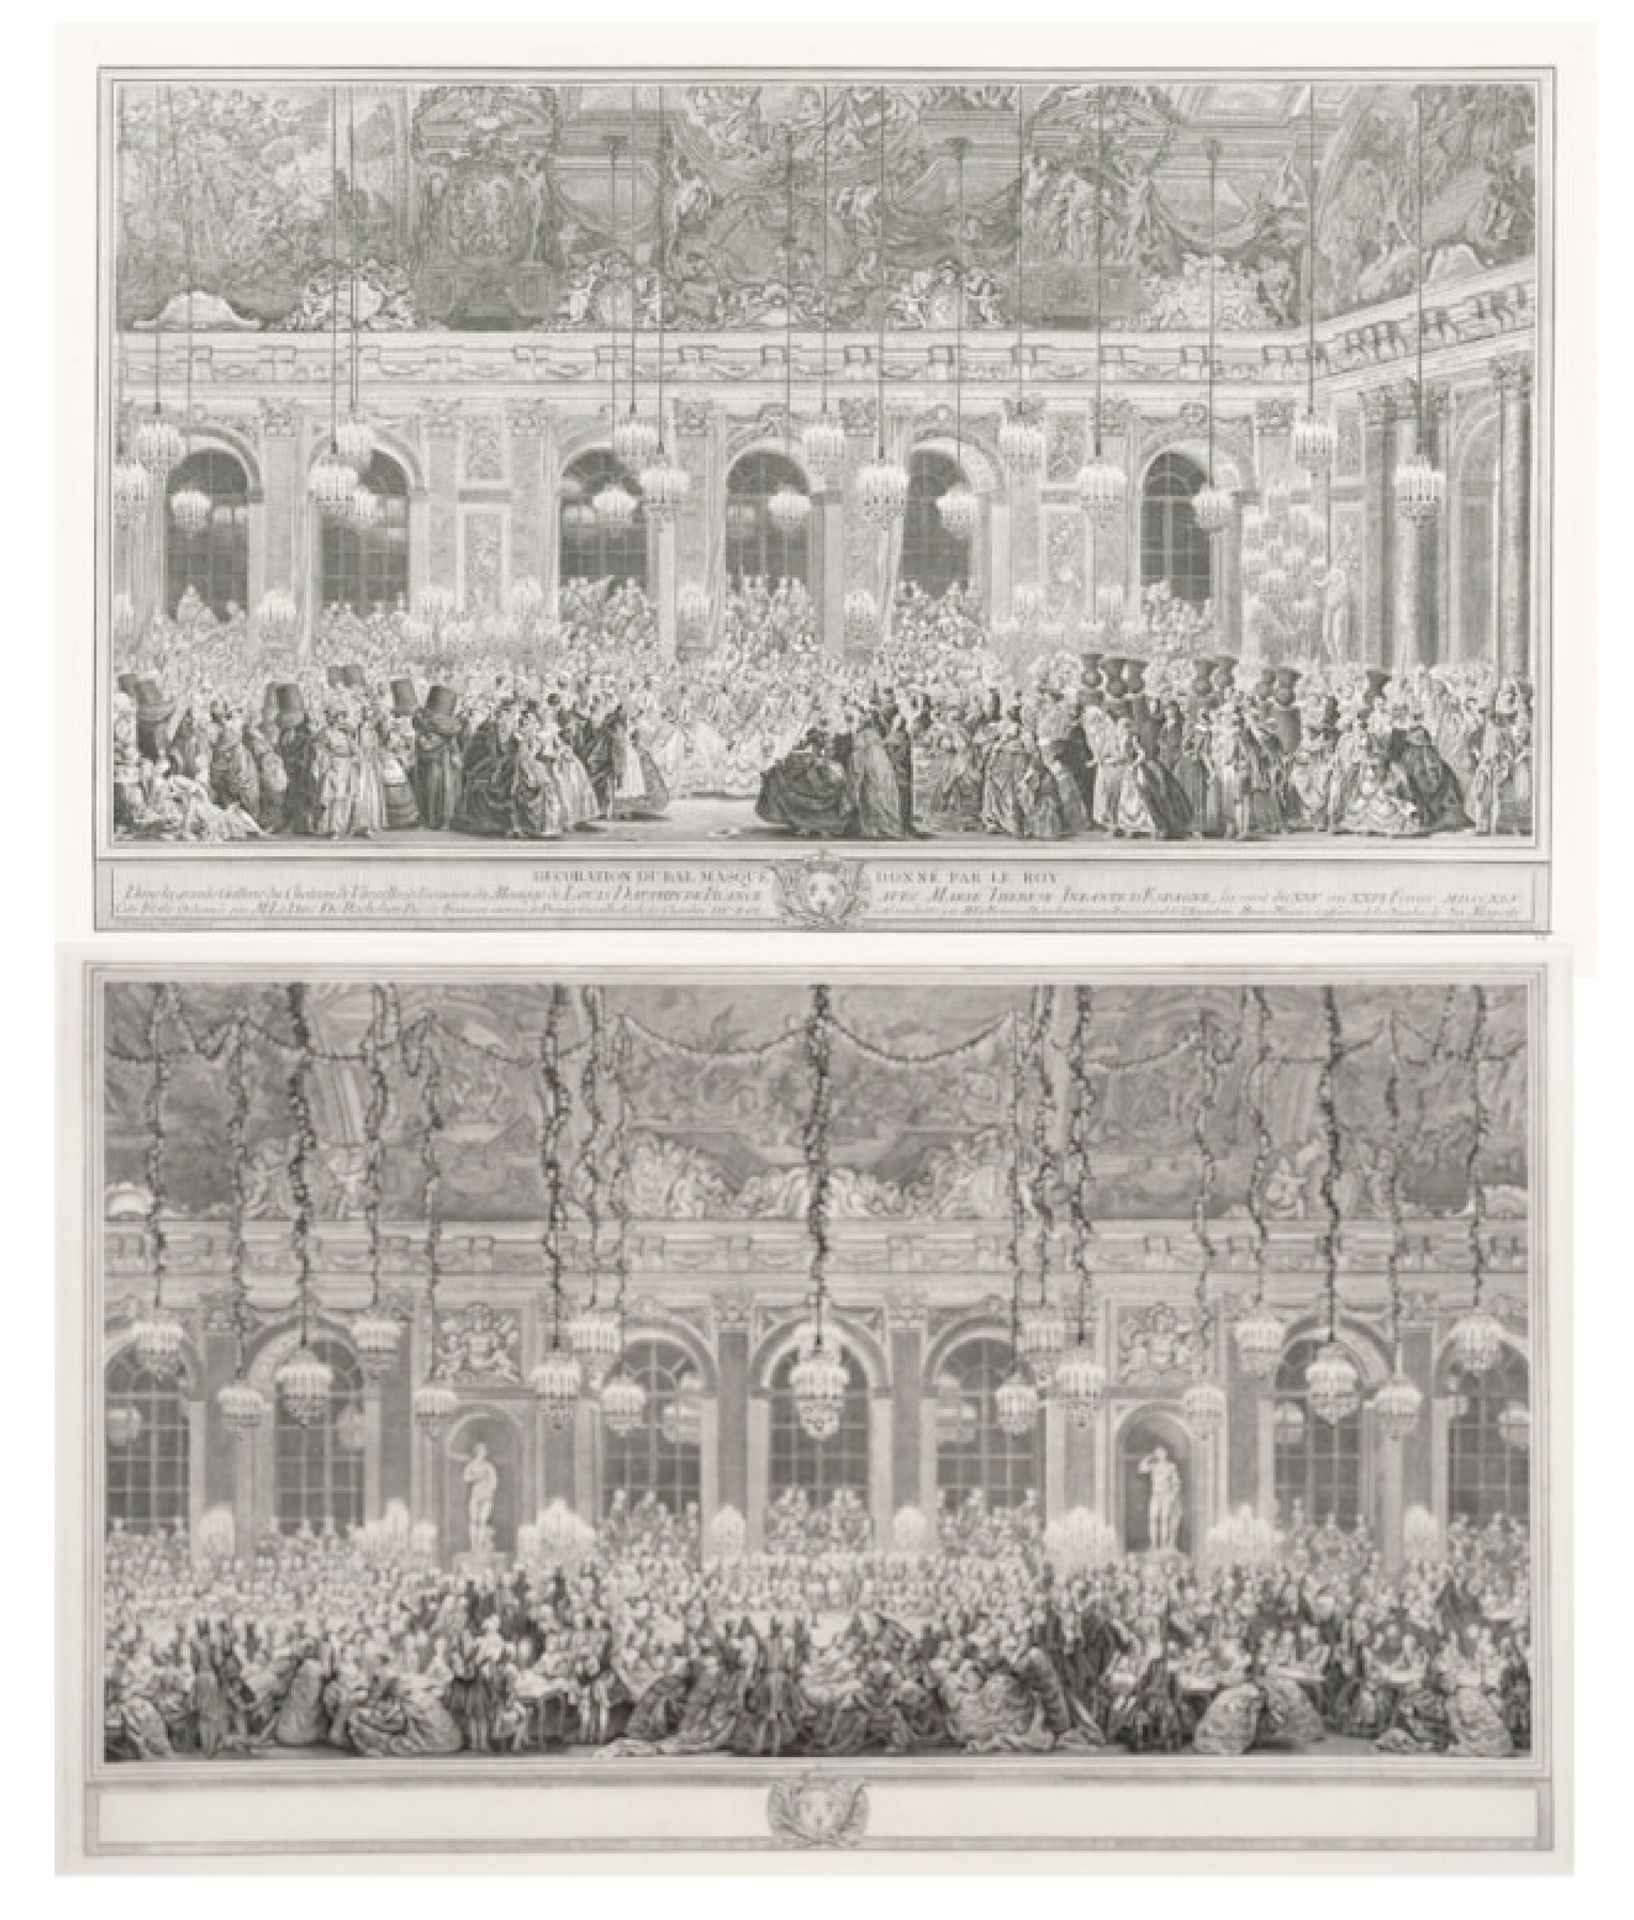 Null 在儿子查尔斯-尼古拉-库欣（1715-1790）之后

国王在凡尔赛宫大画廊举行的假面舞会的装饰 - 1746年

国王和王后在凡尔赛宫大画廊的游戏
&hellip;